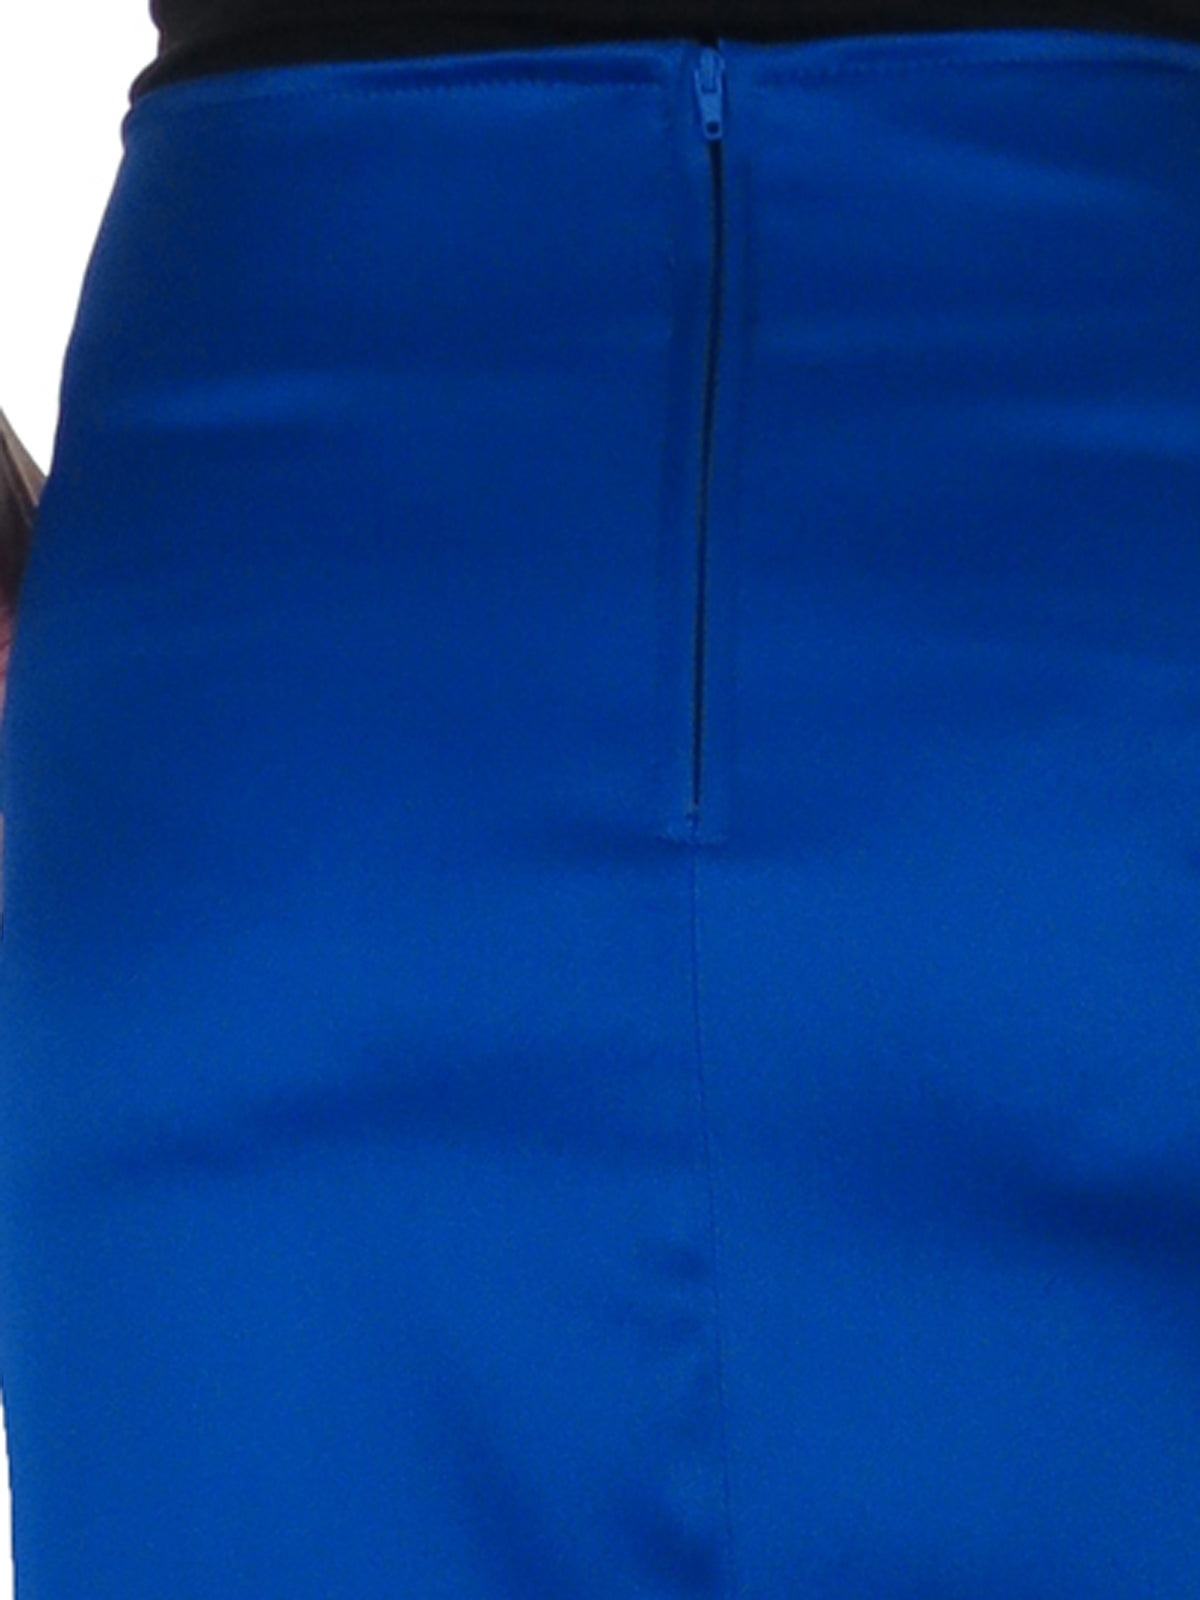 Women's Smart Thigh Split Bodycon Satin Skirt Royal Blue